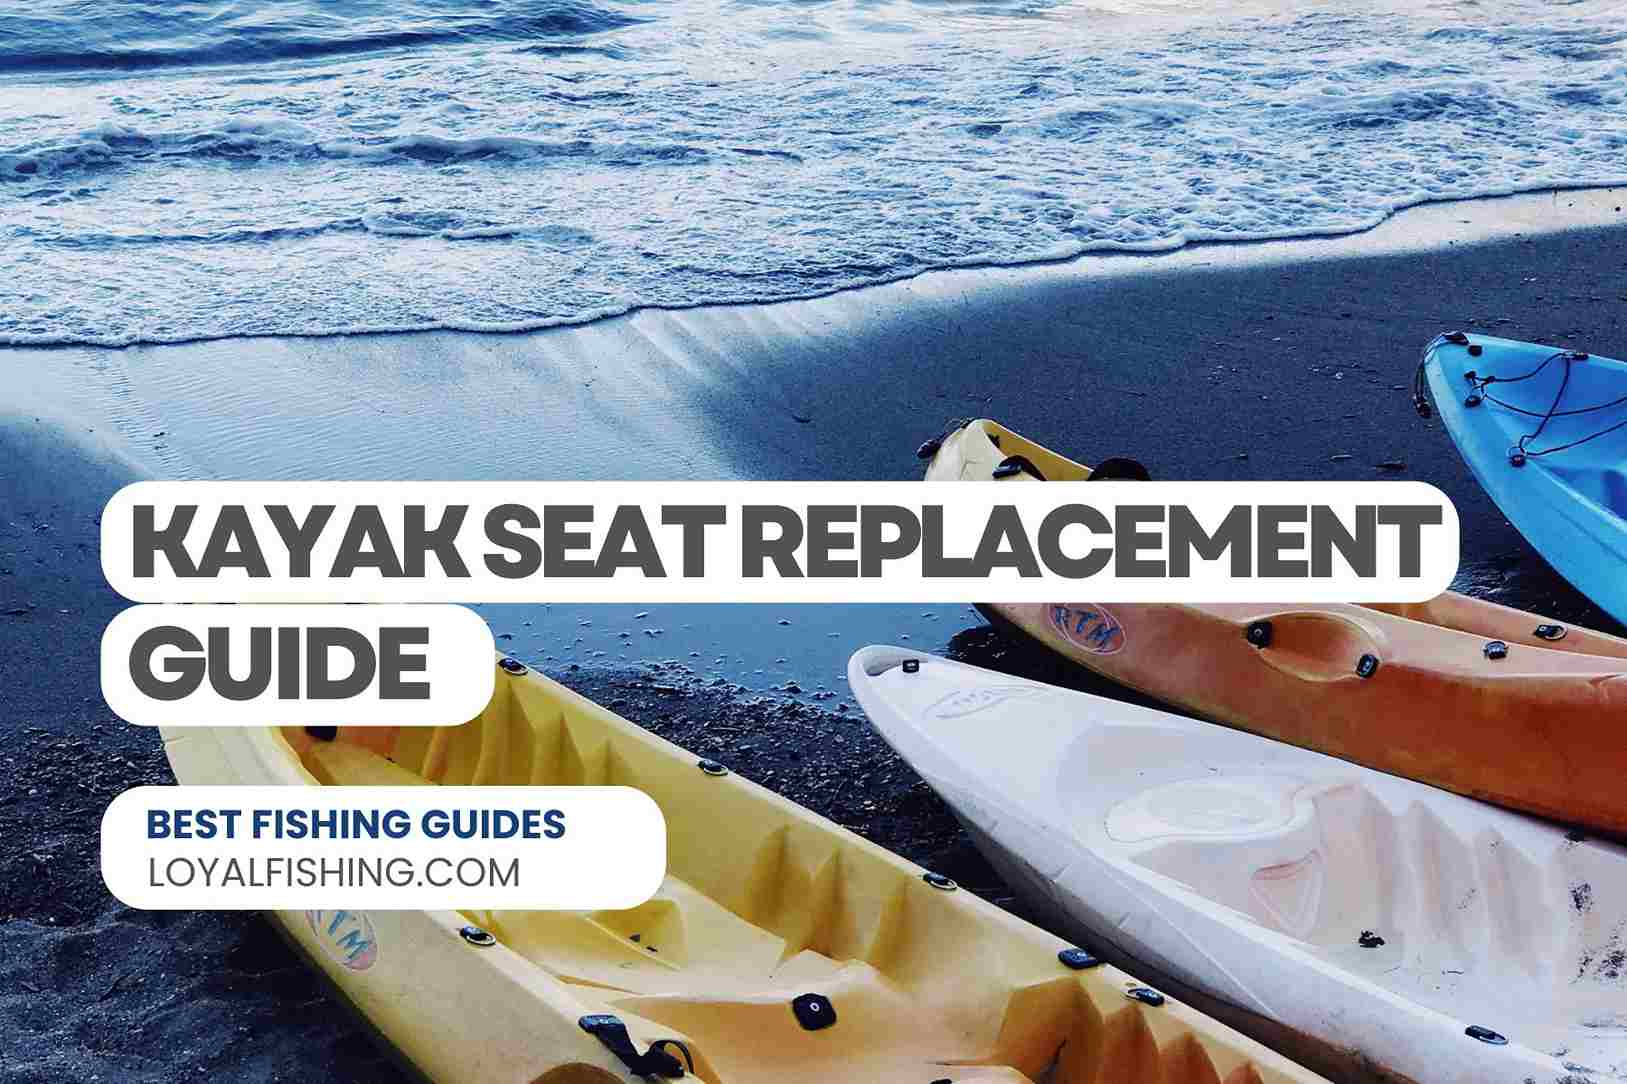 Kayak Seat Replacement Guide